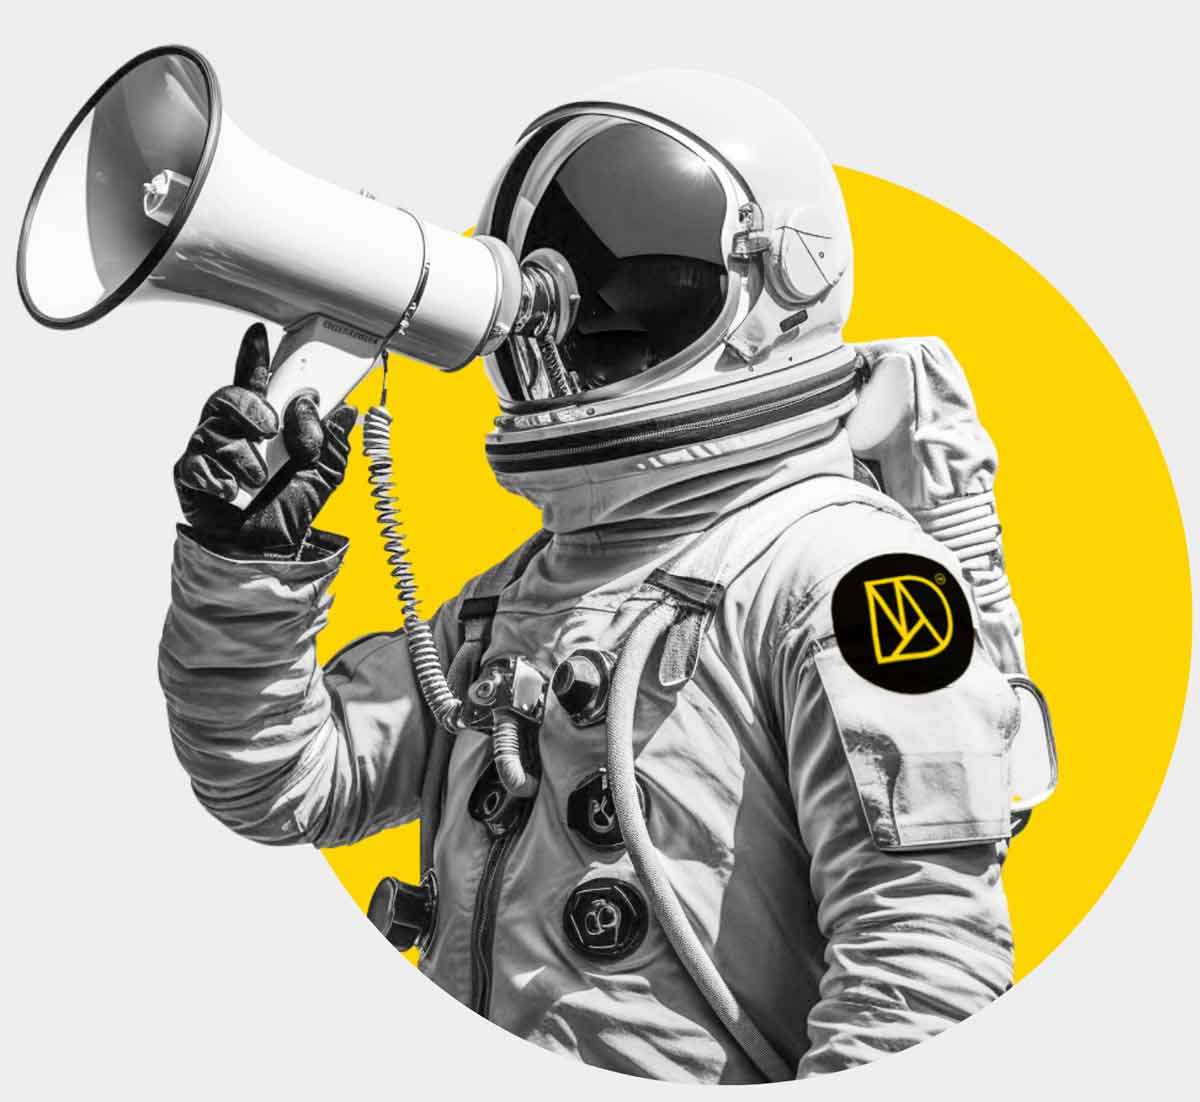 The Sydney Digital Marketing Agency Astronaut - holding a megaphone.